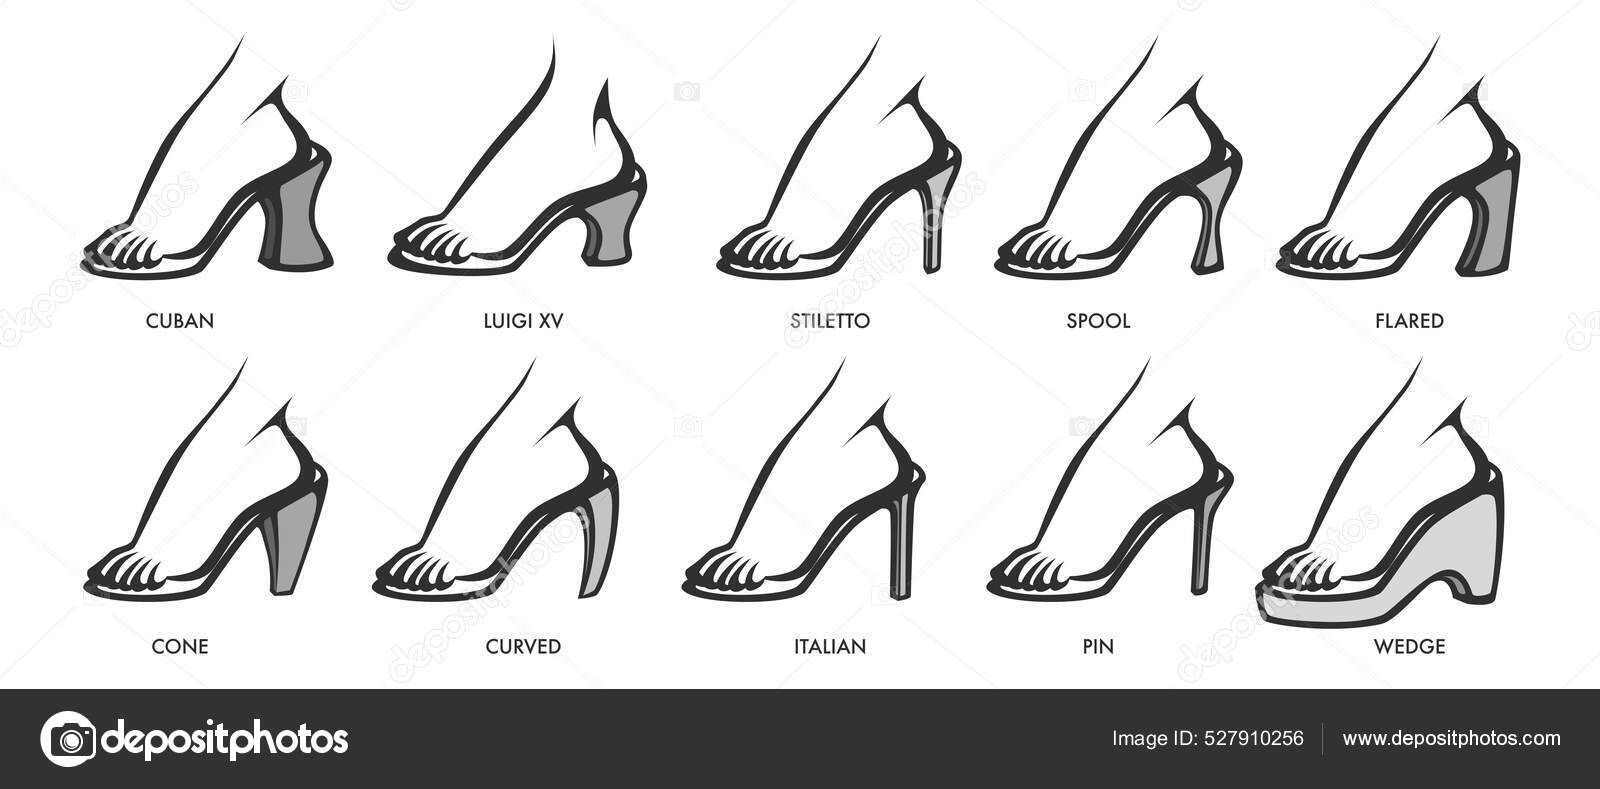 High heels for 14:15 year old. | Beautylish